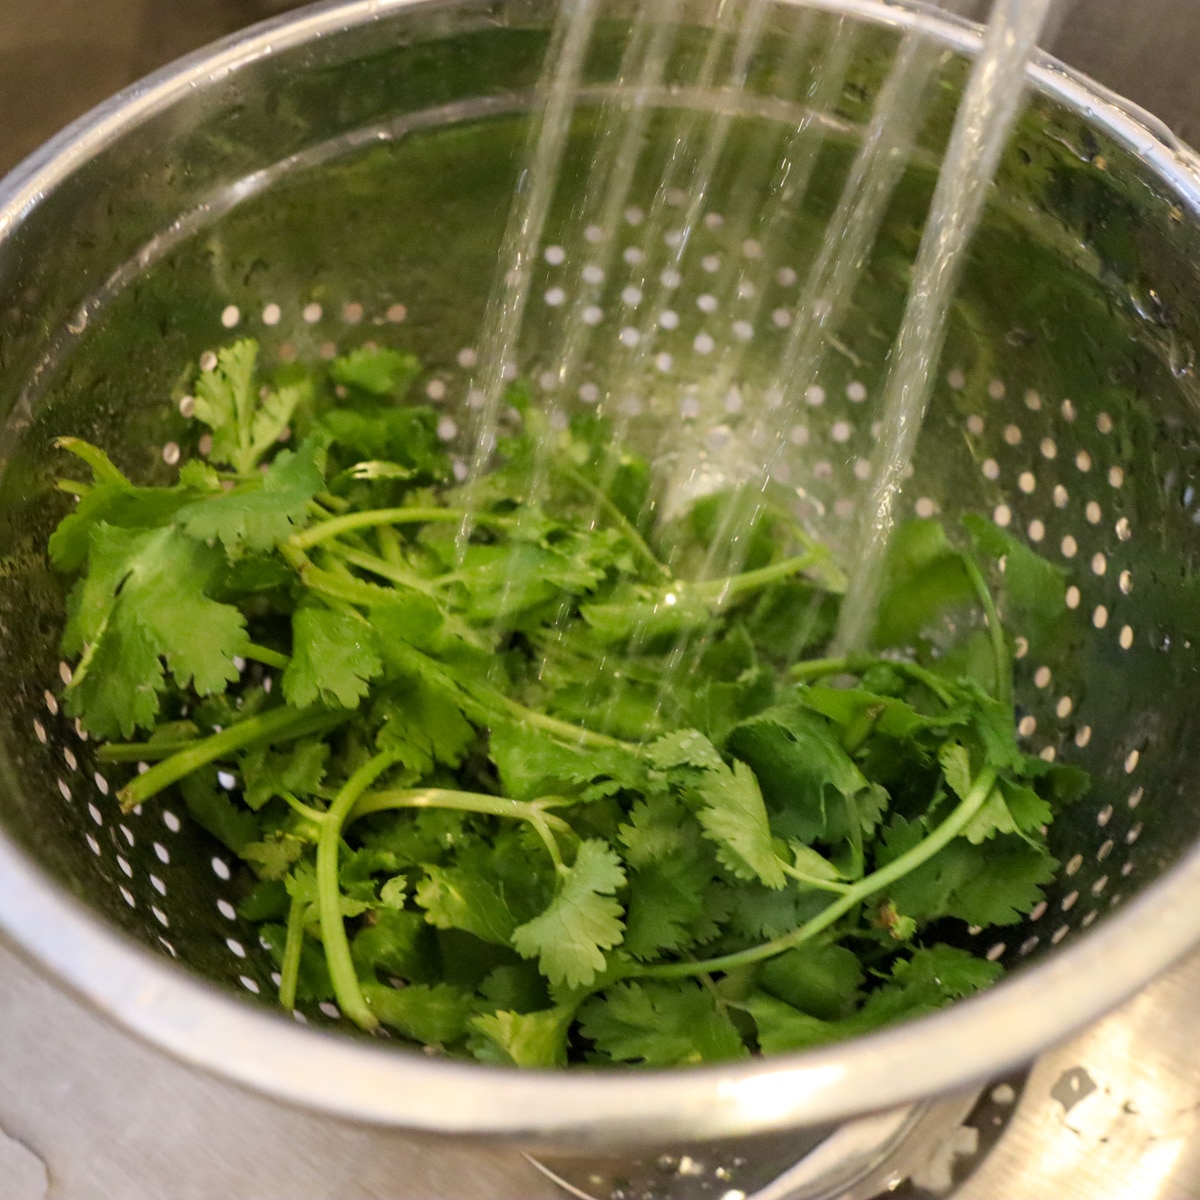 washing cilantro
